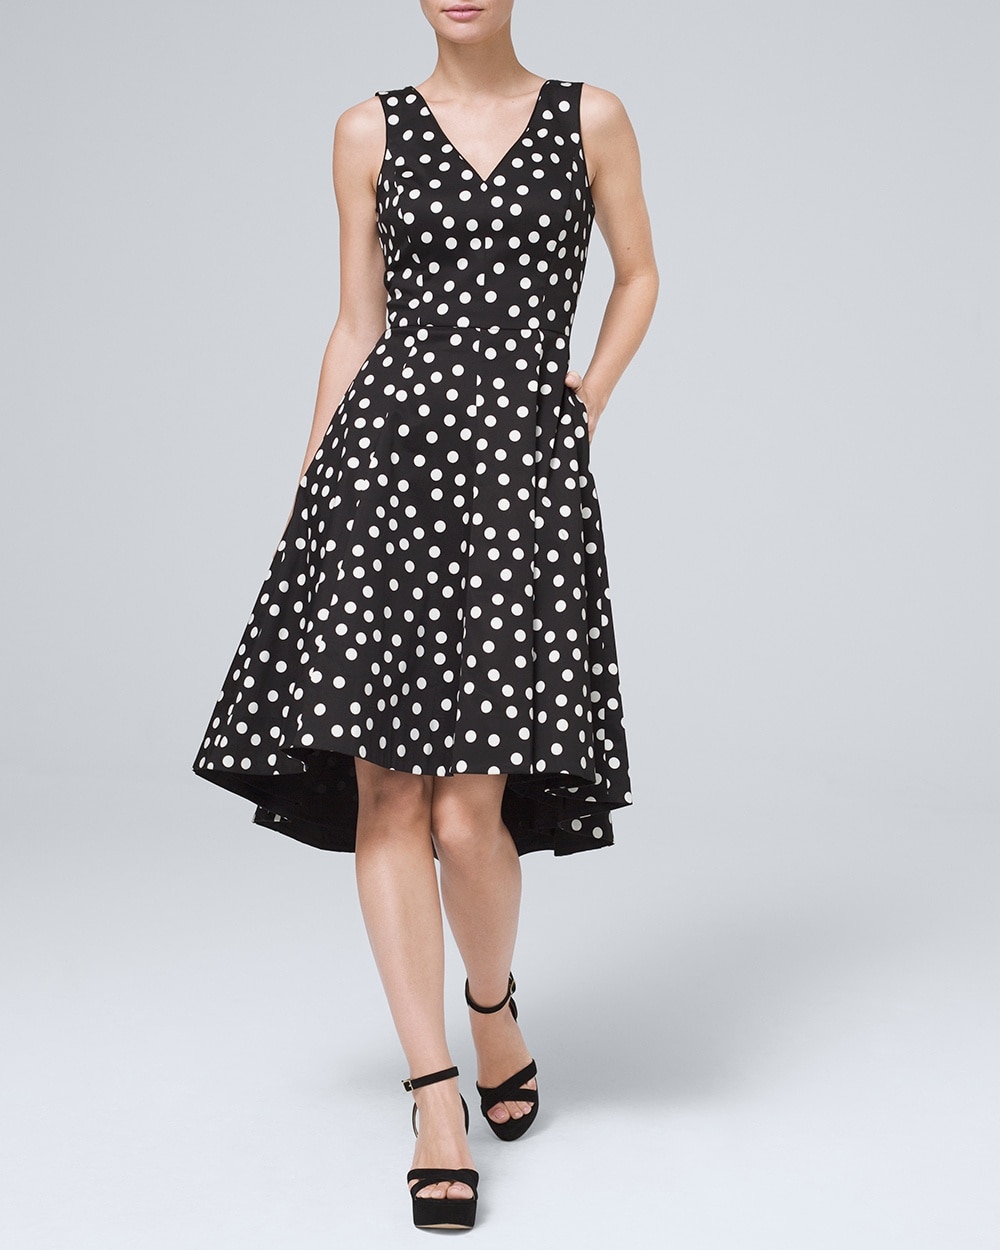 large polka dot dress